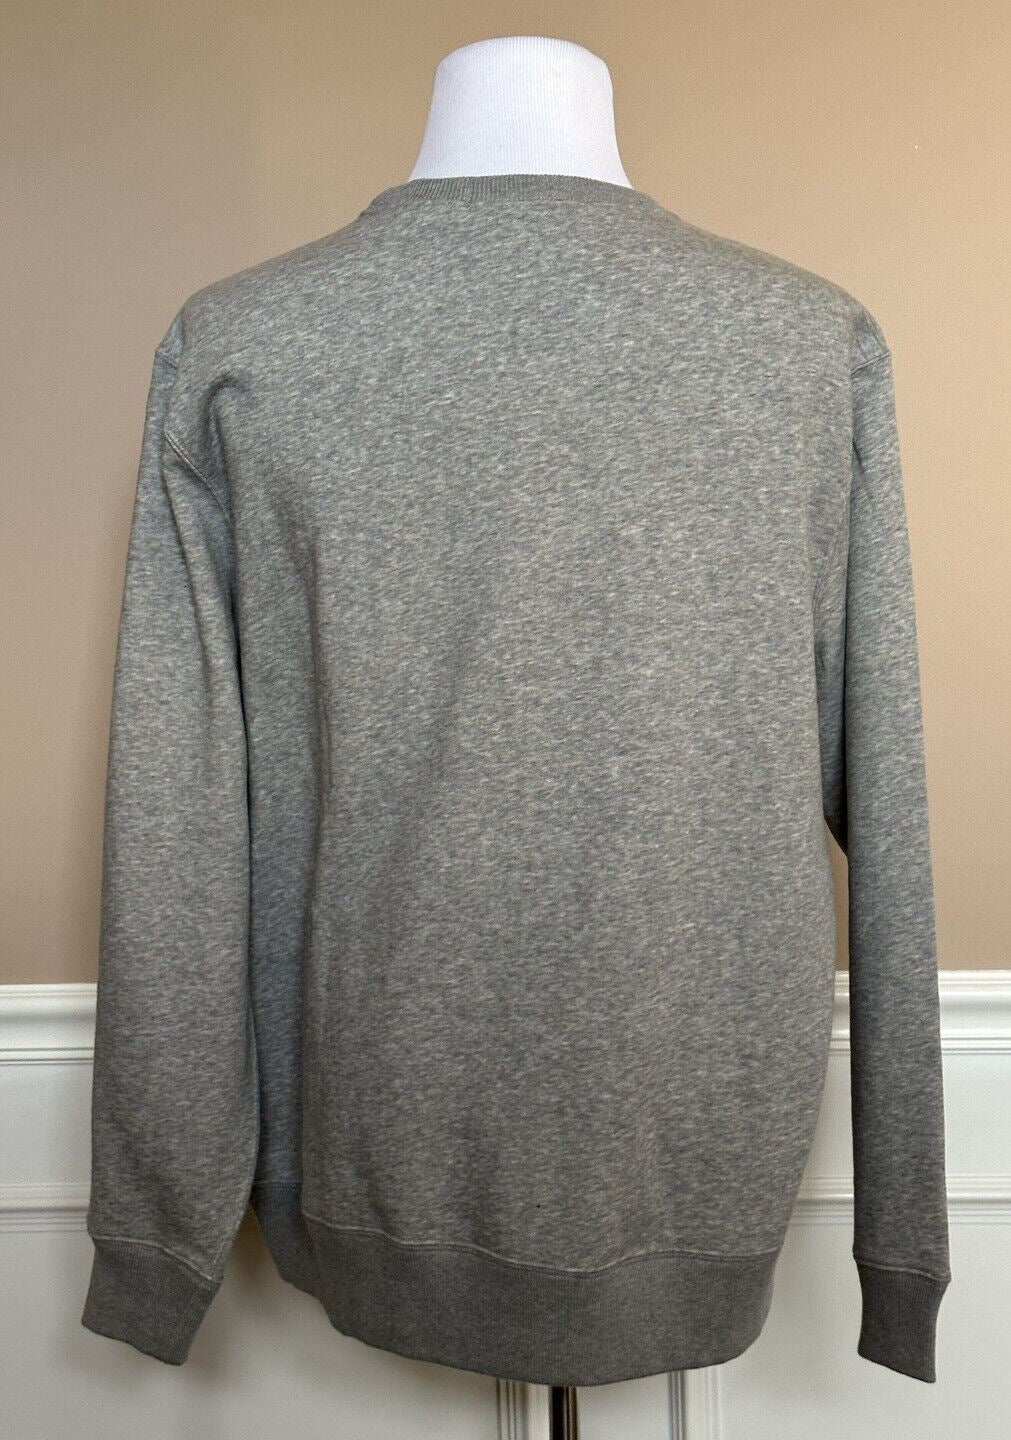 Neu $168 Polo Ralph Lauren Bear Sweatshirt Grau XL/TG 